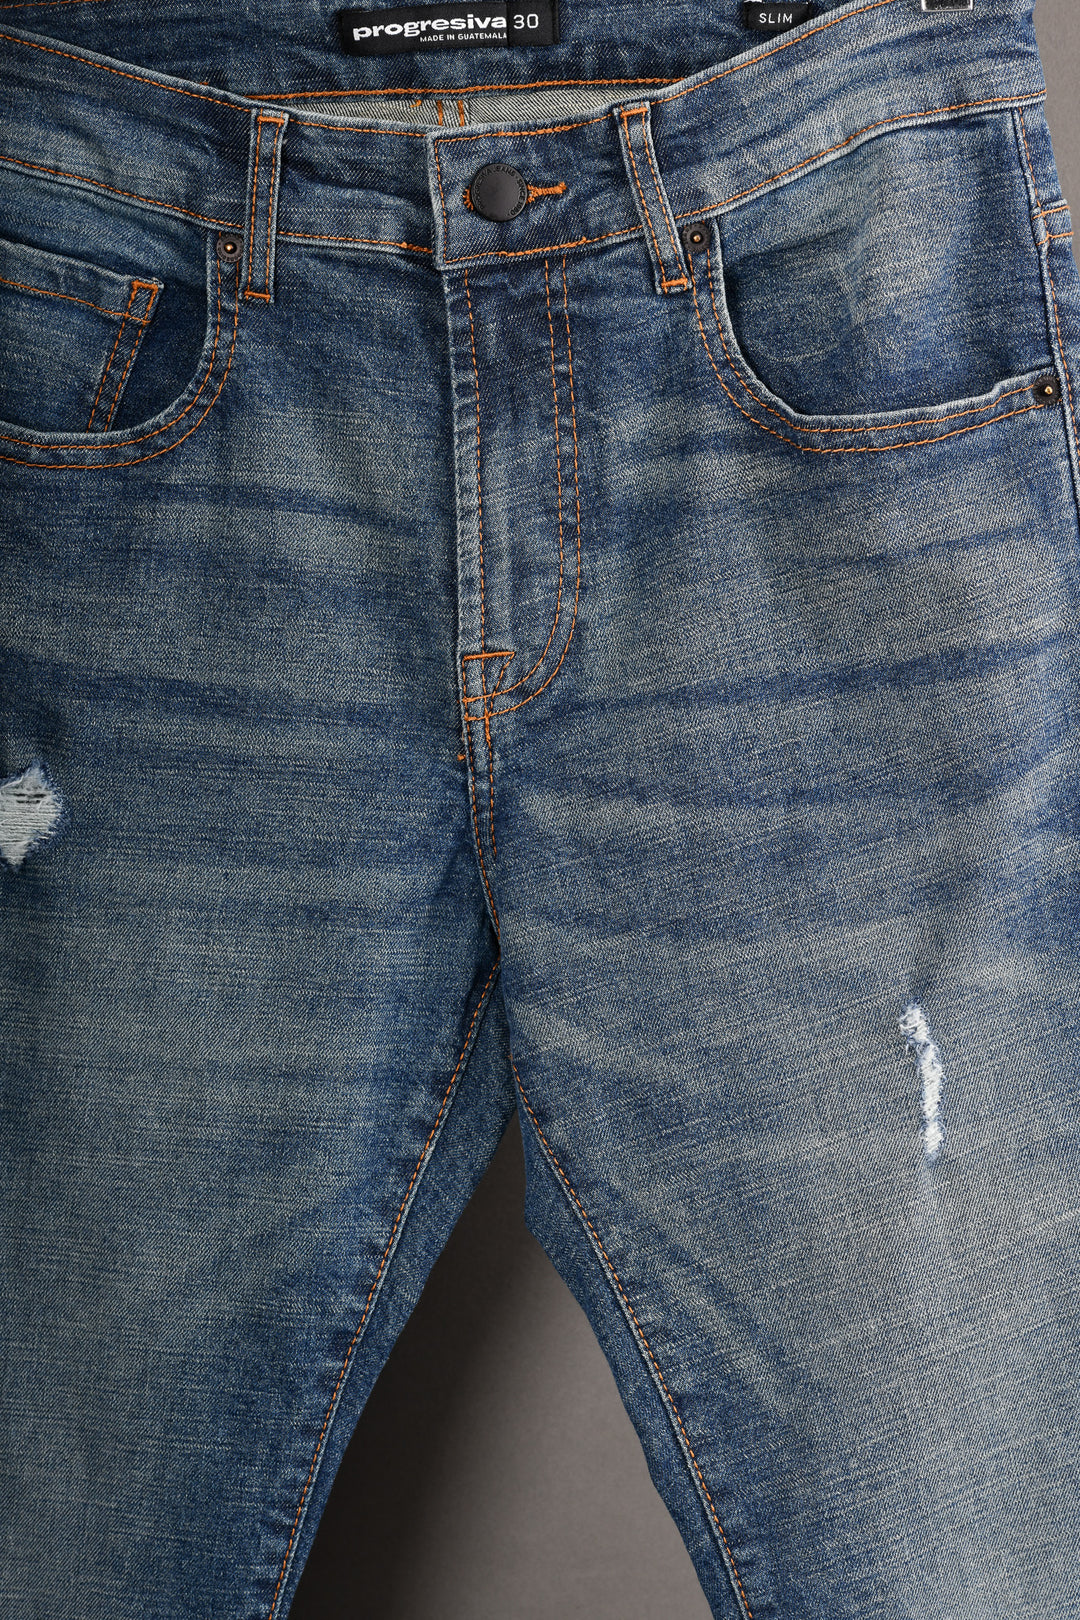 Jeans super denim - No. 11  - slim - Vintage Roto